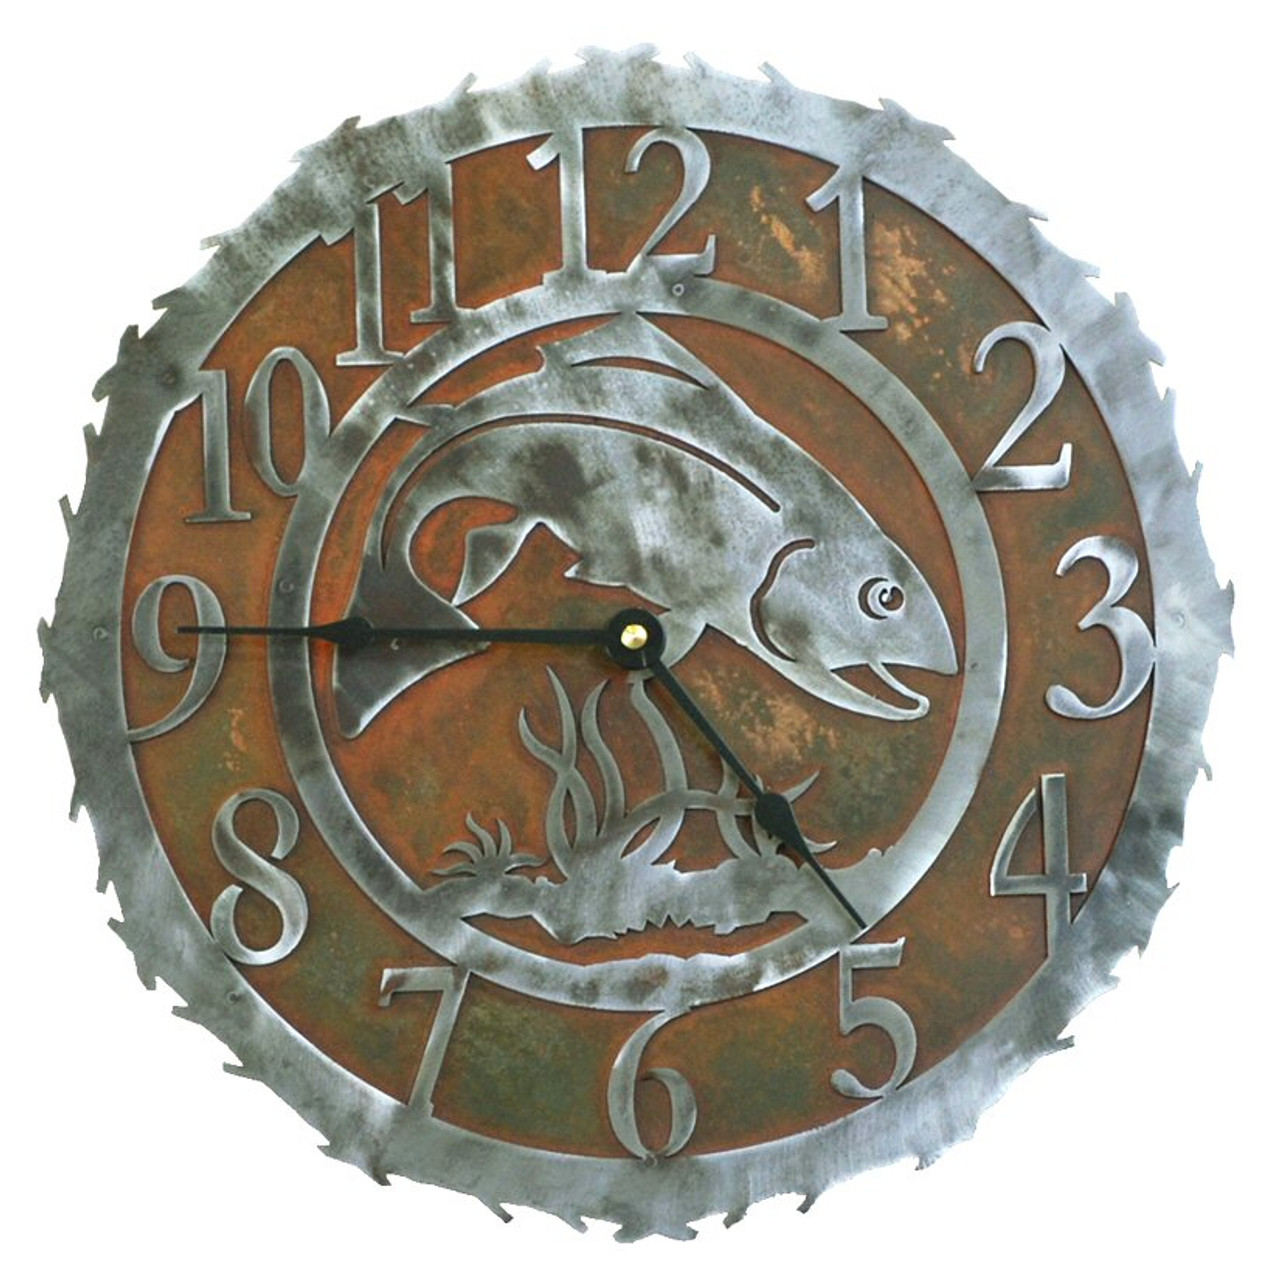 12 Trout Fish Metal Wall Clock - Rustic Wall Decor